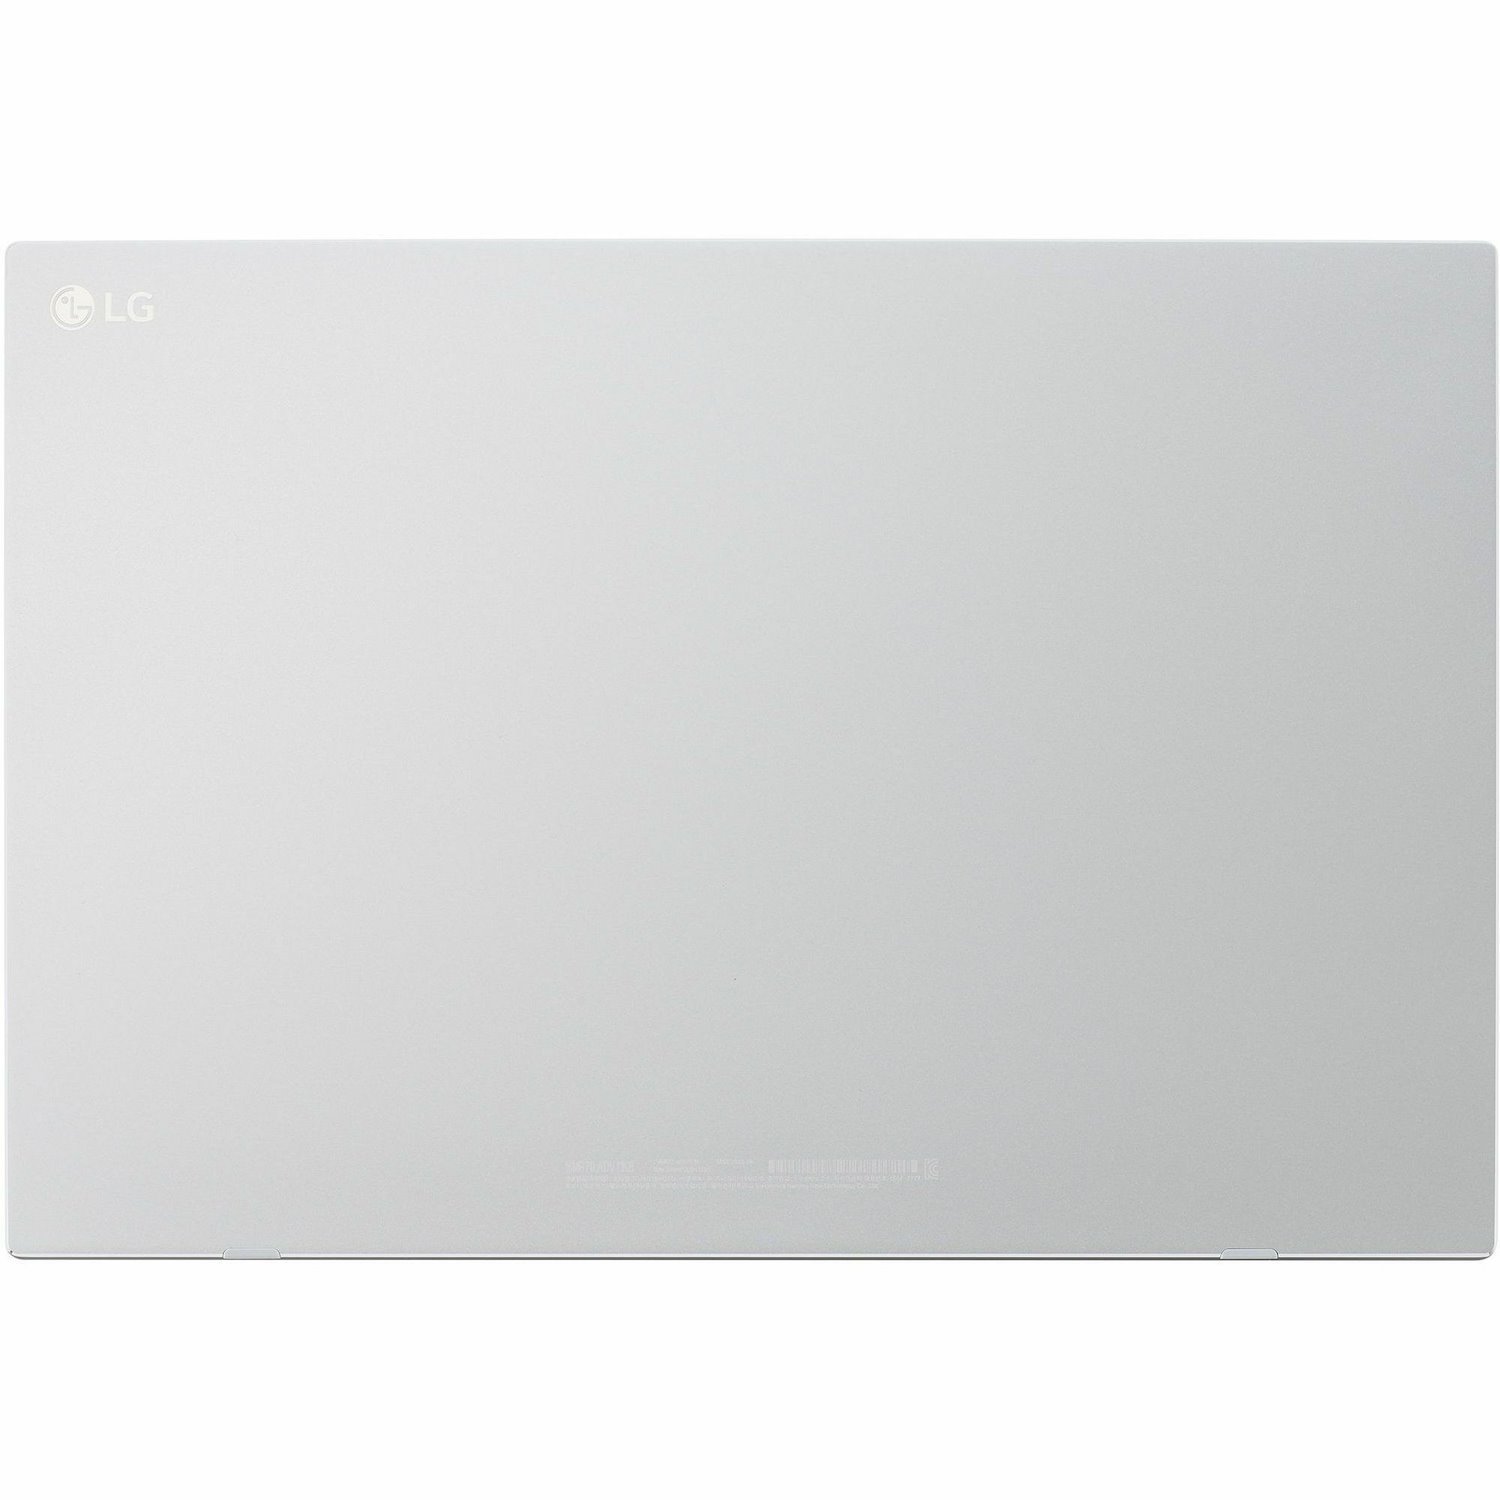 LG gram +view 16MR70.ASDA8 16" Class WQXGA LCD Monitor - 16:10